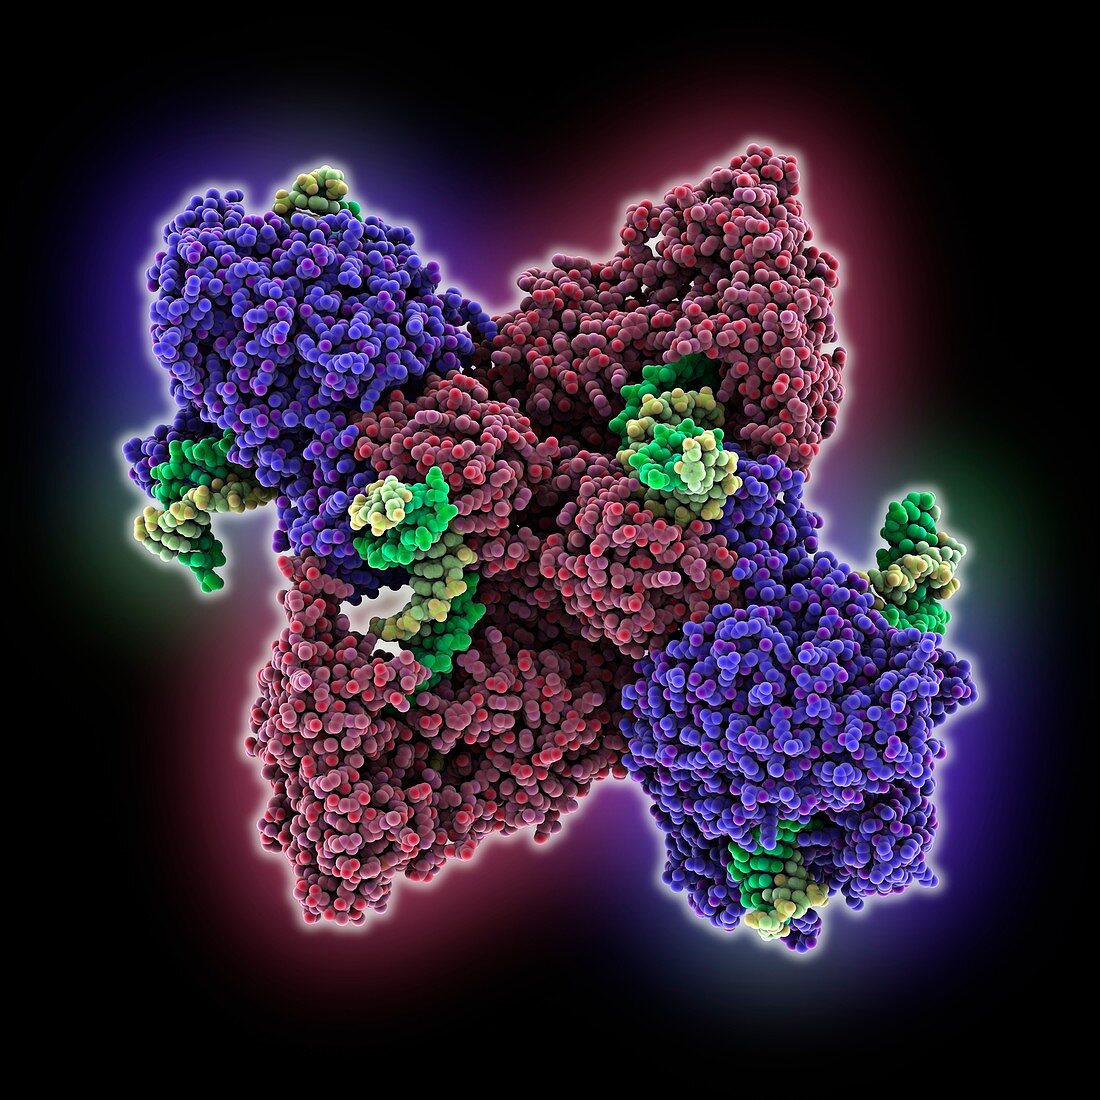 DNA complexed with DNA-methyltransferase DrdV, molecular model